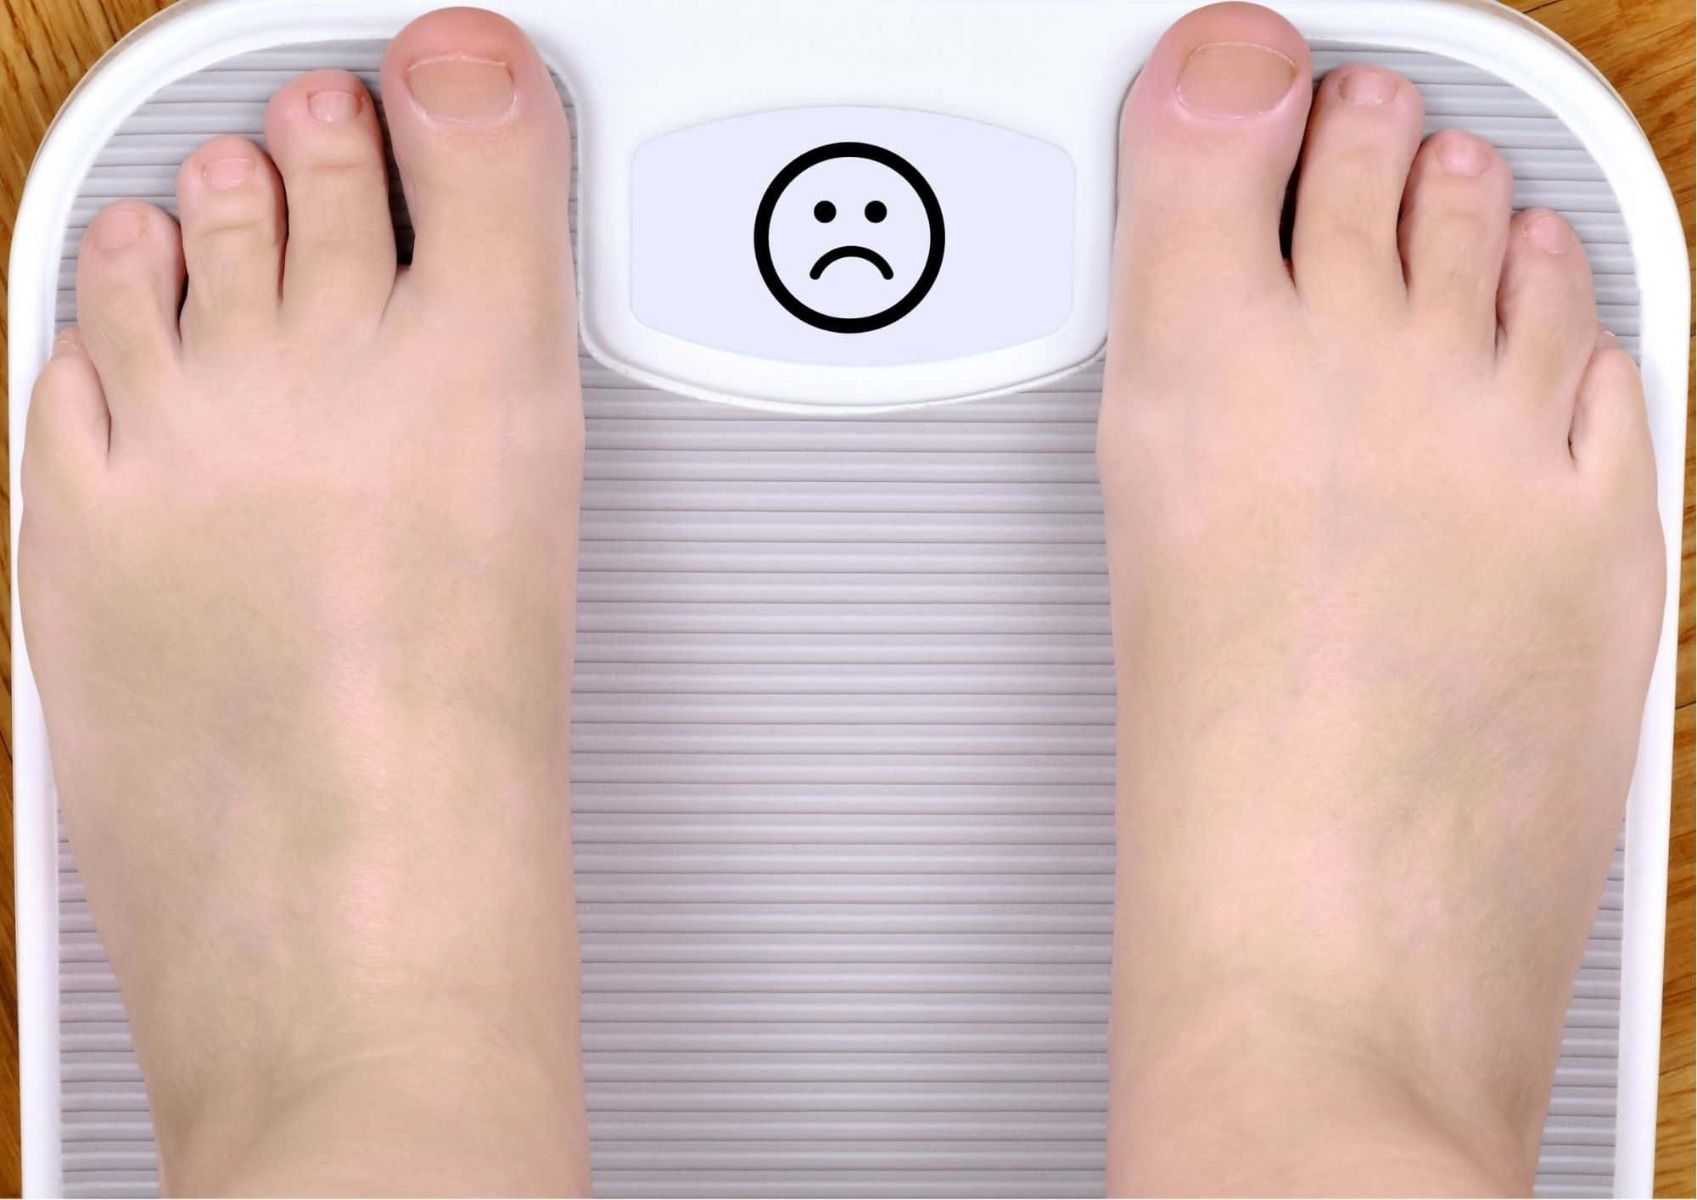 Weight loss symptom of diabetes